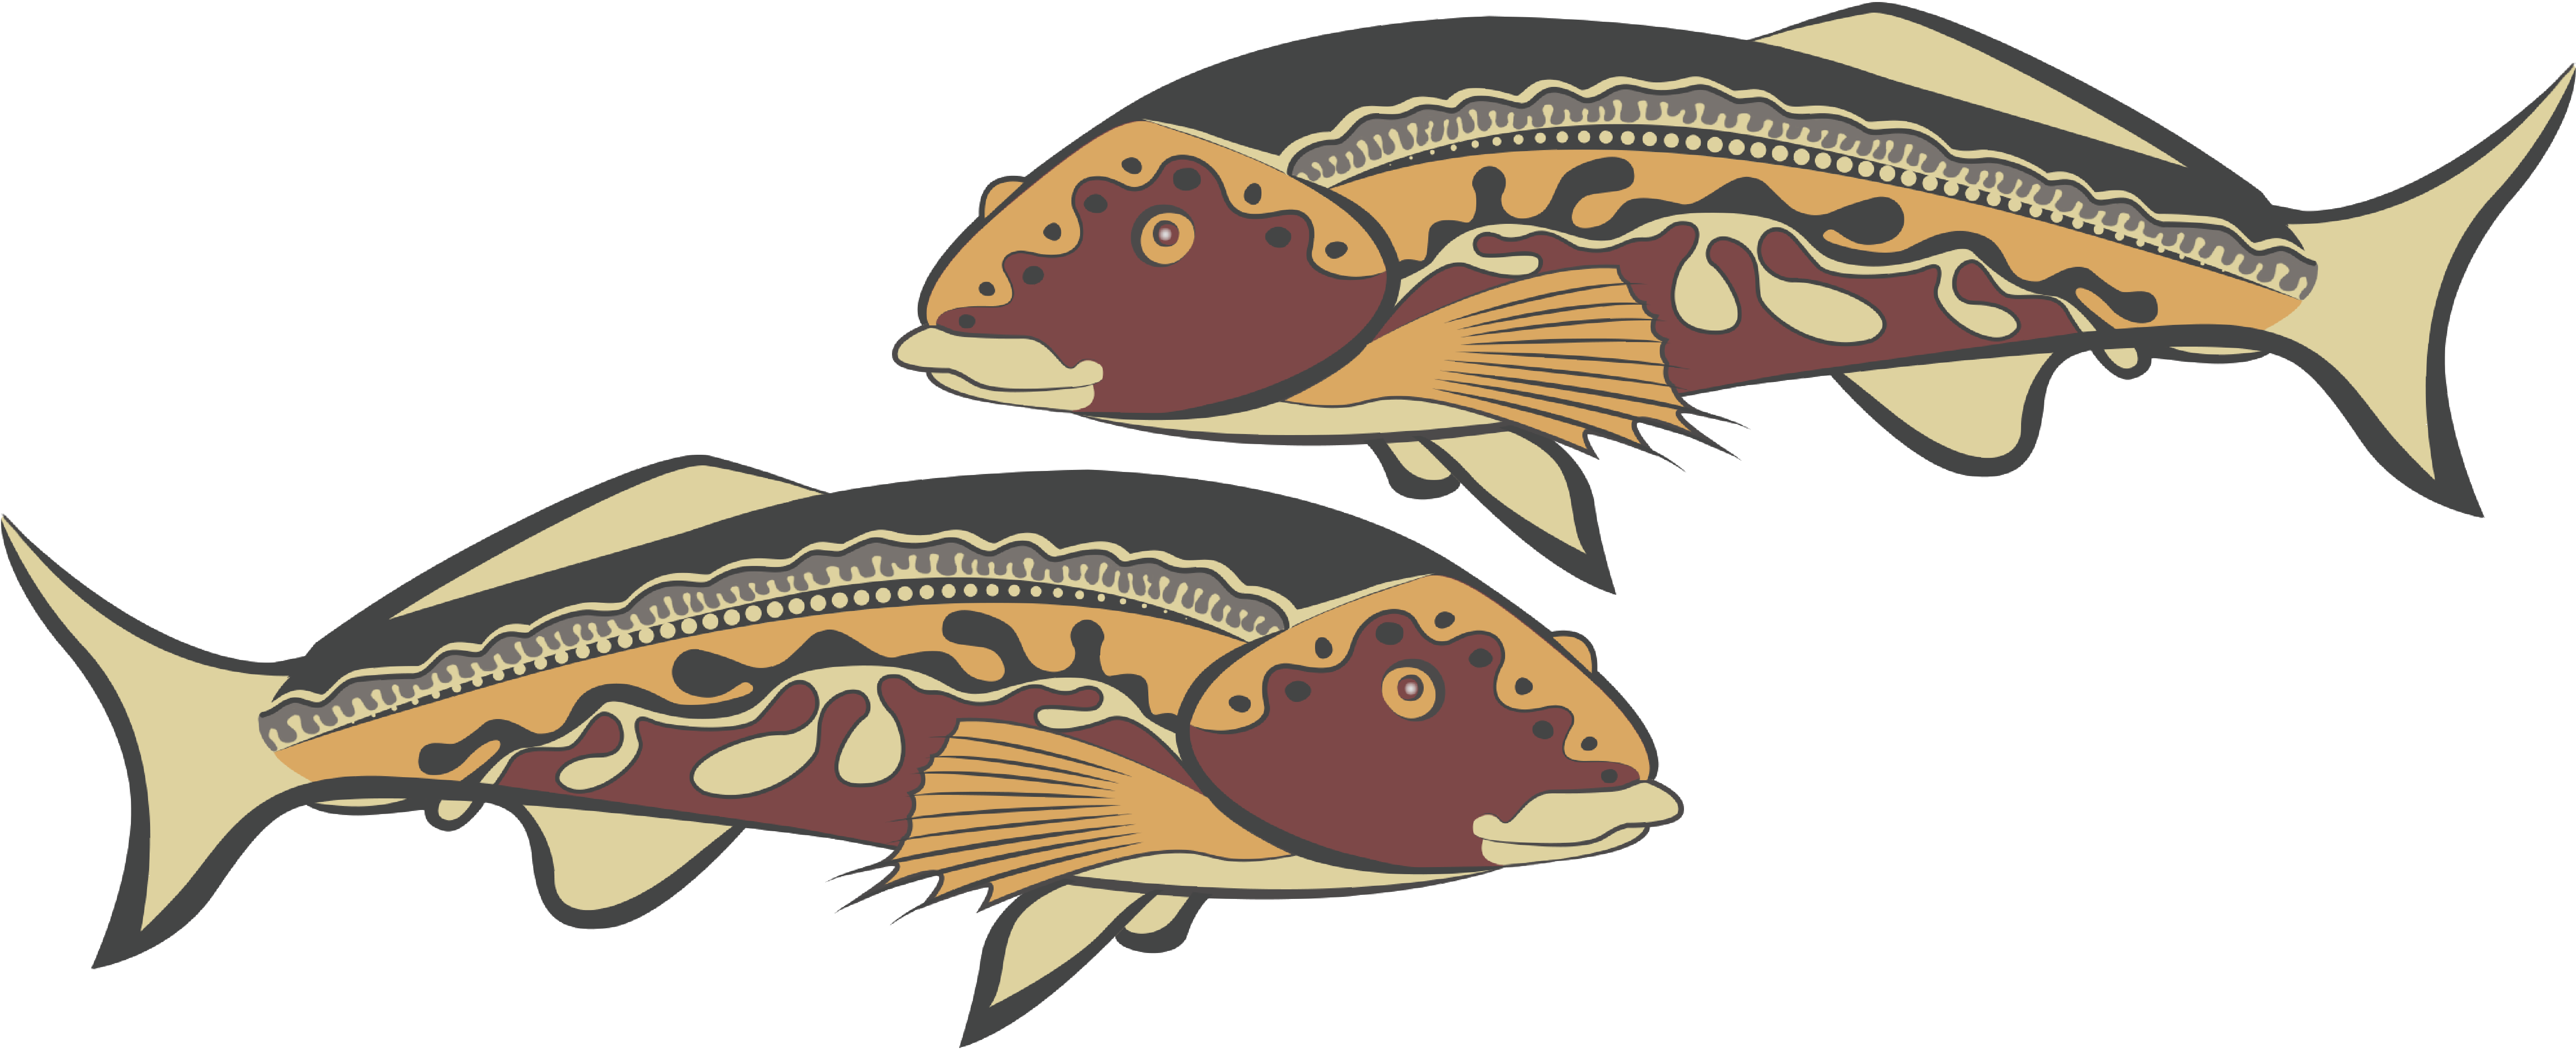 Illustration of the Gynburra fish